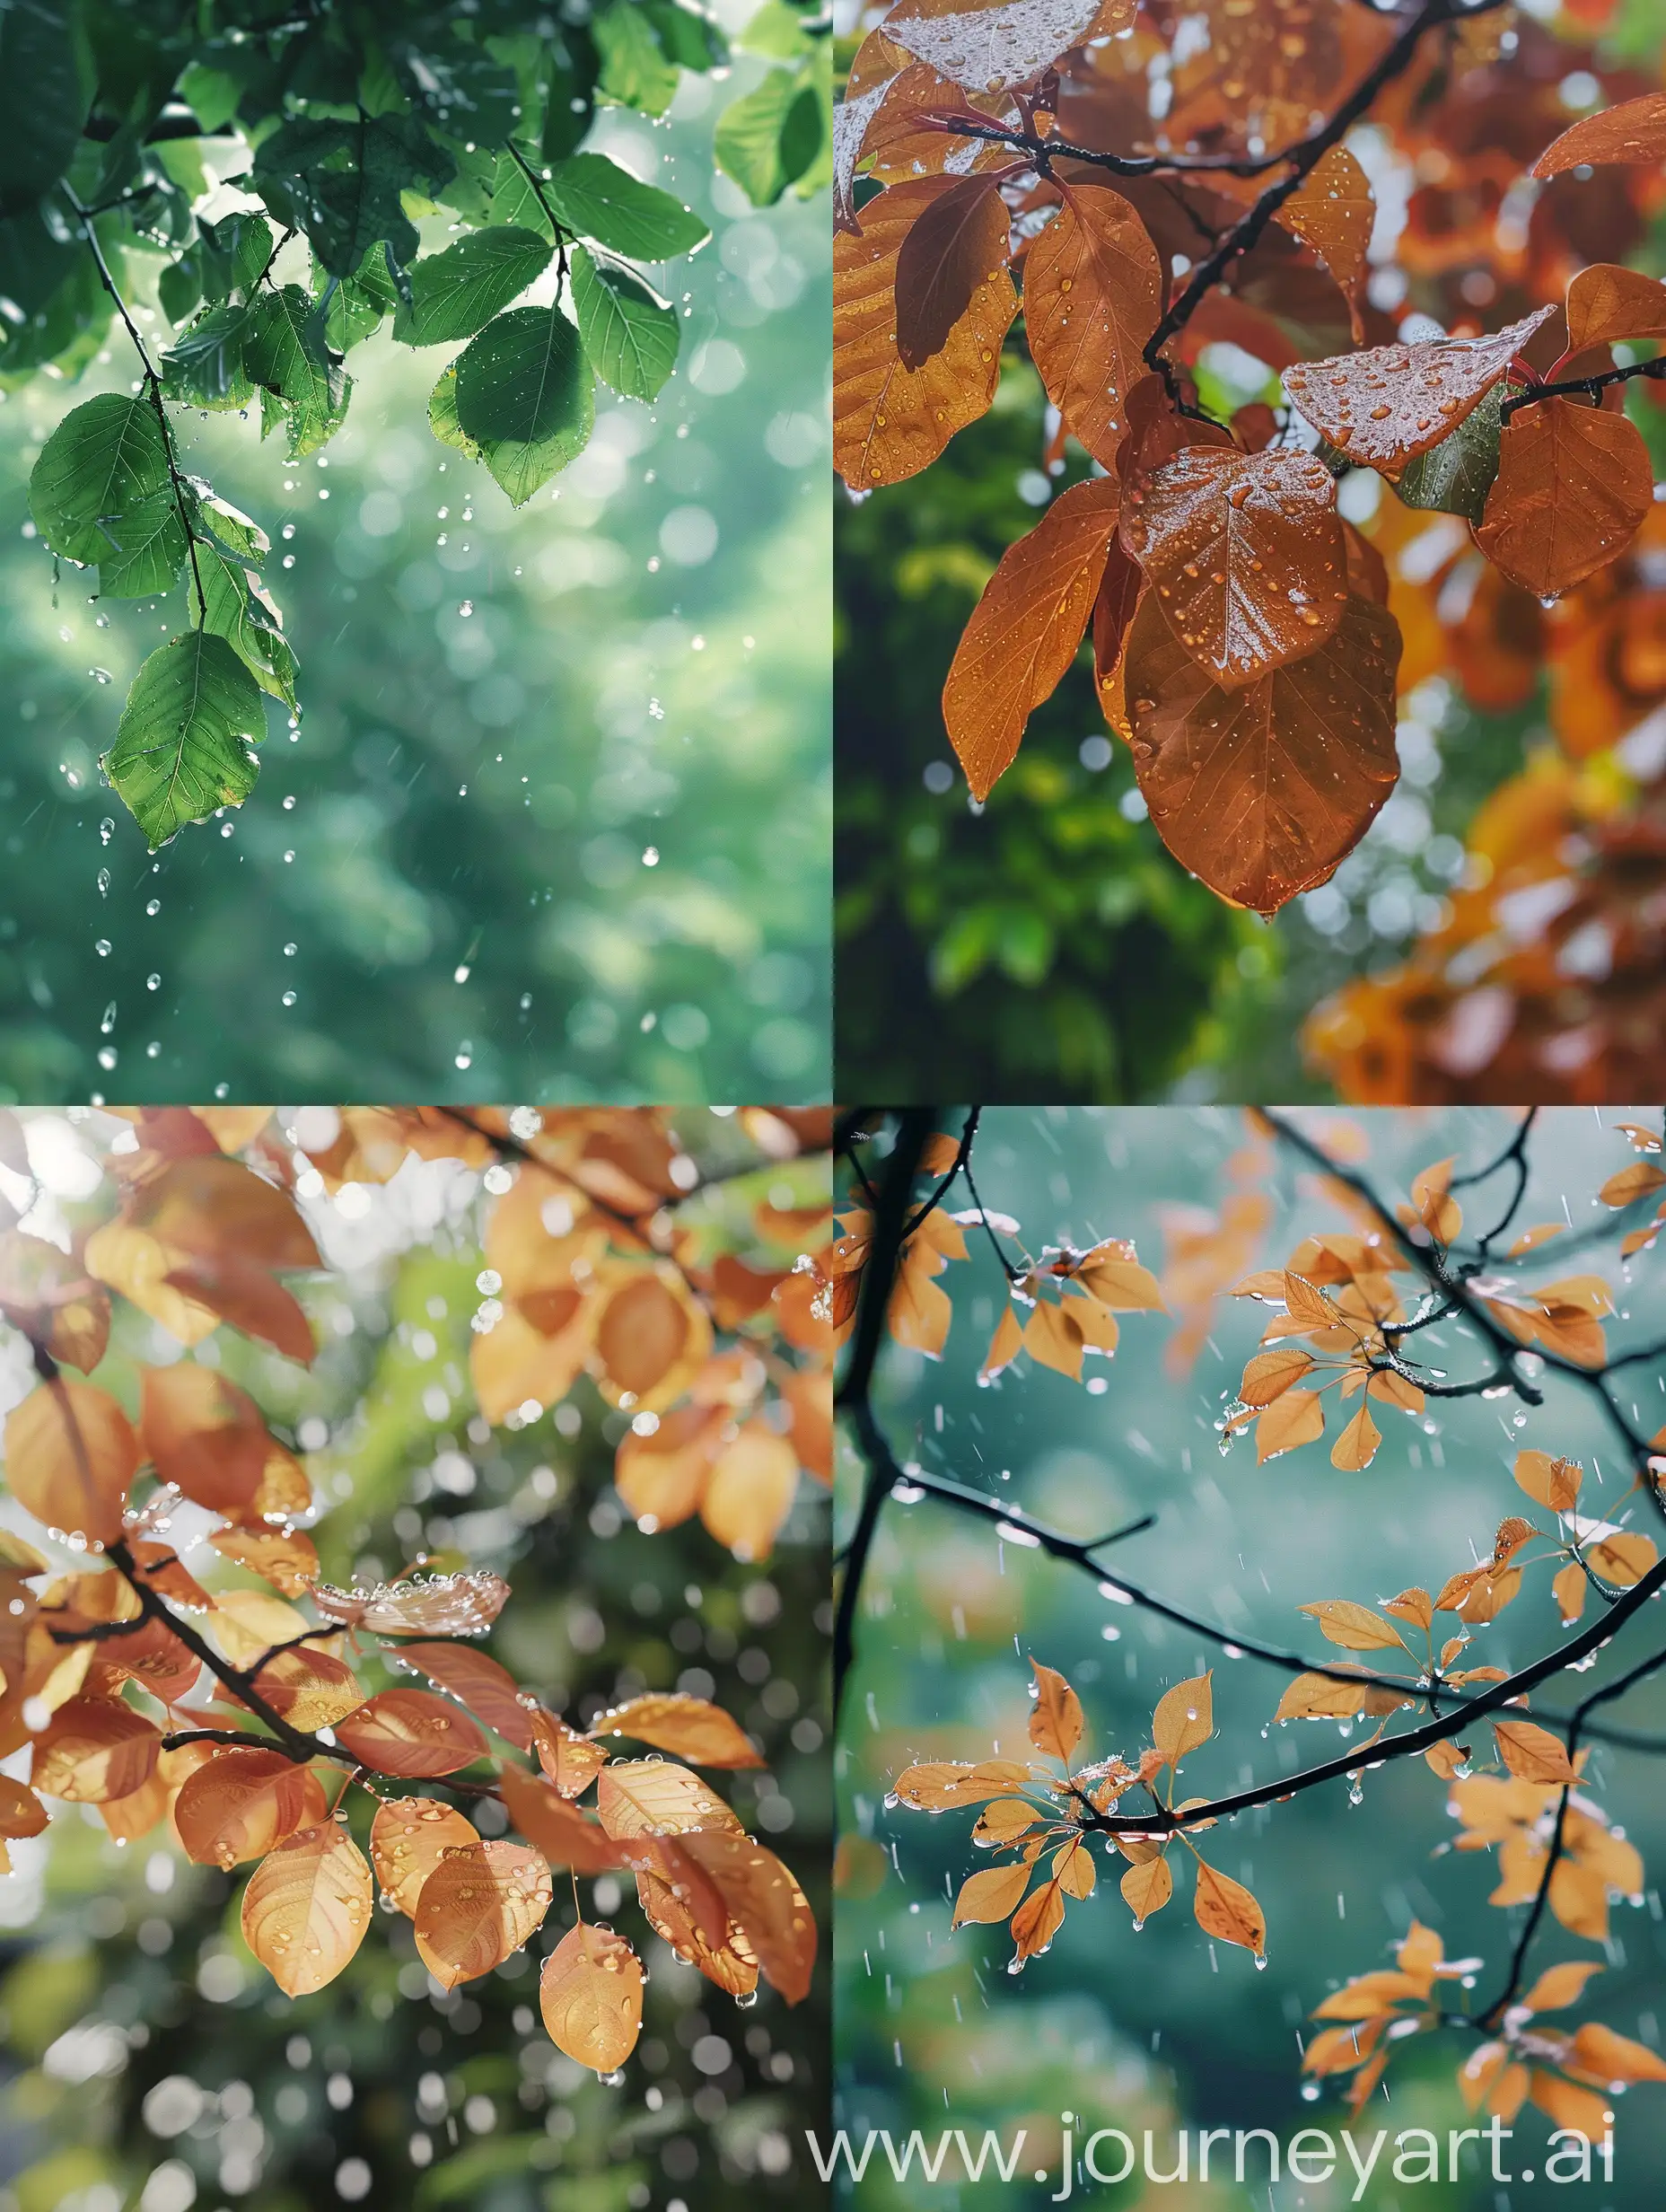 Anime style,Shojo style mix makato shinkai style,a beautiful close up of leaves on tree after rain.